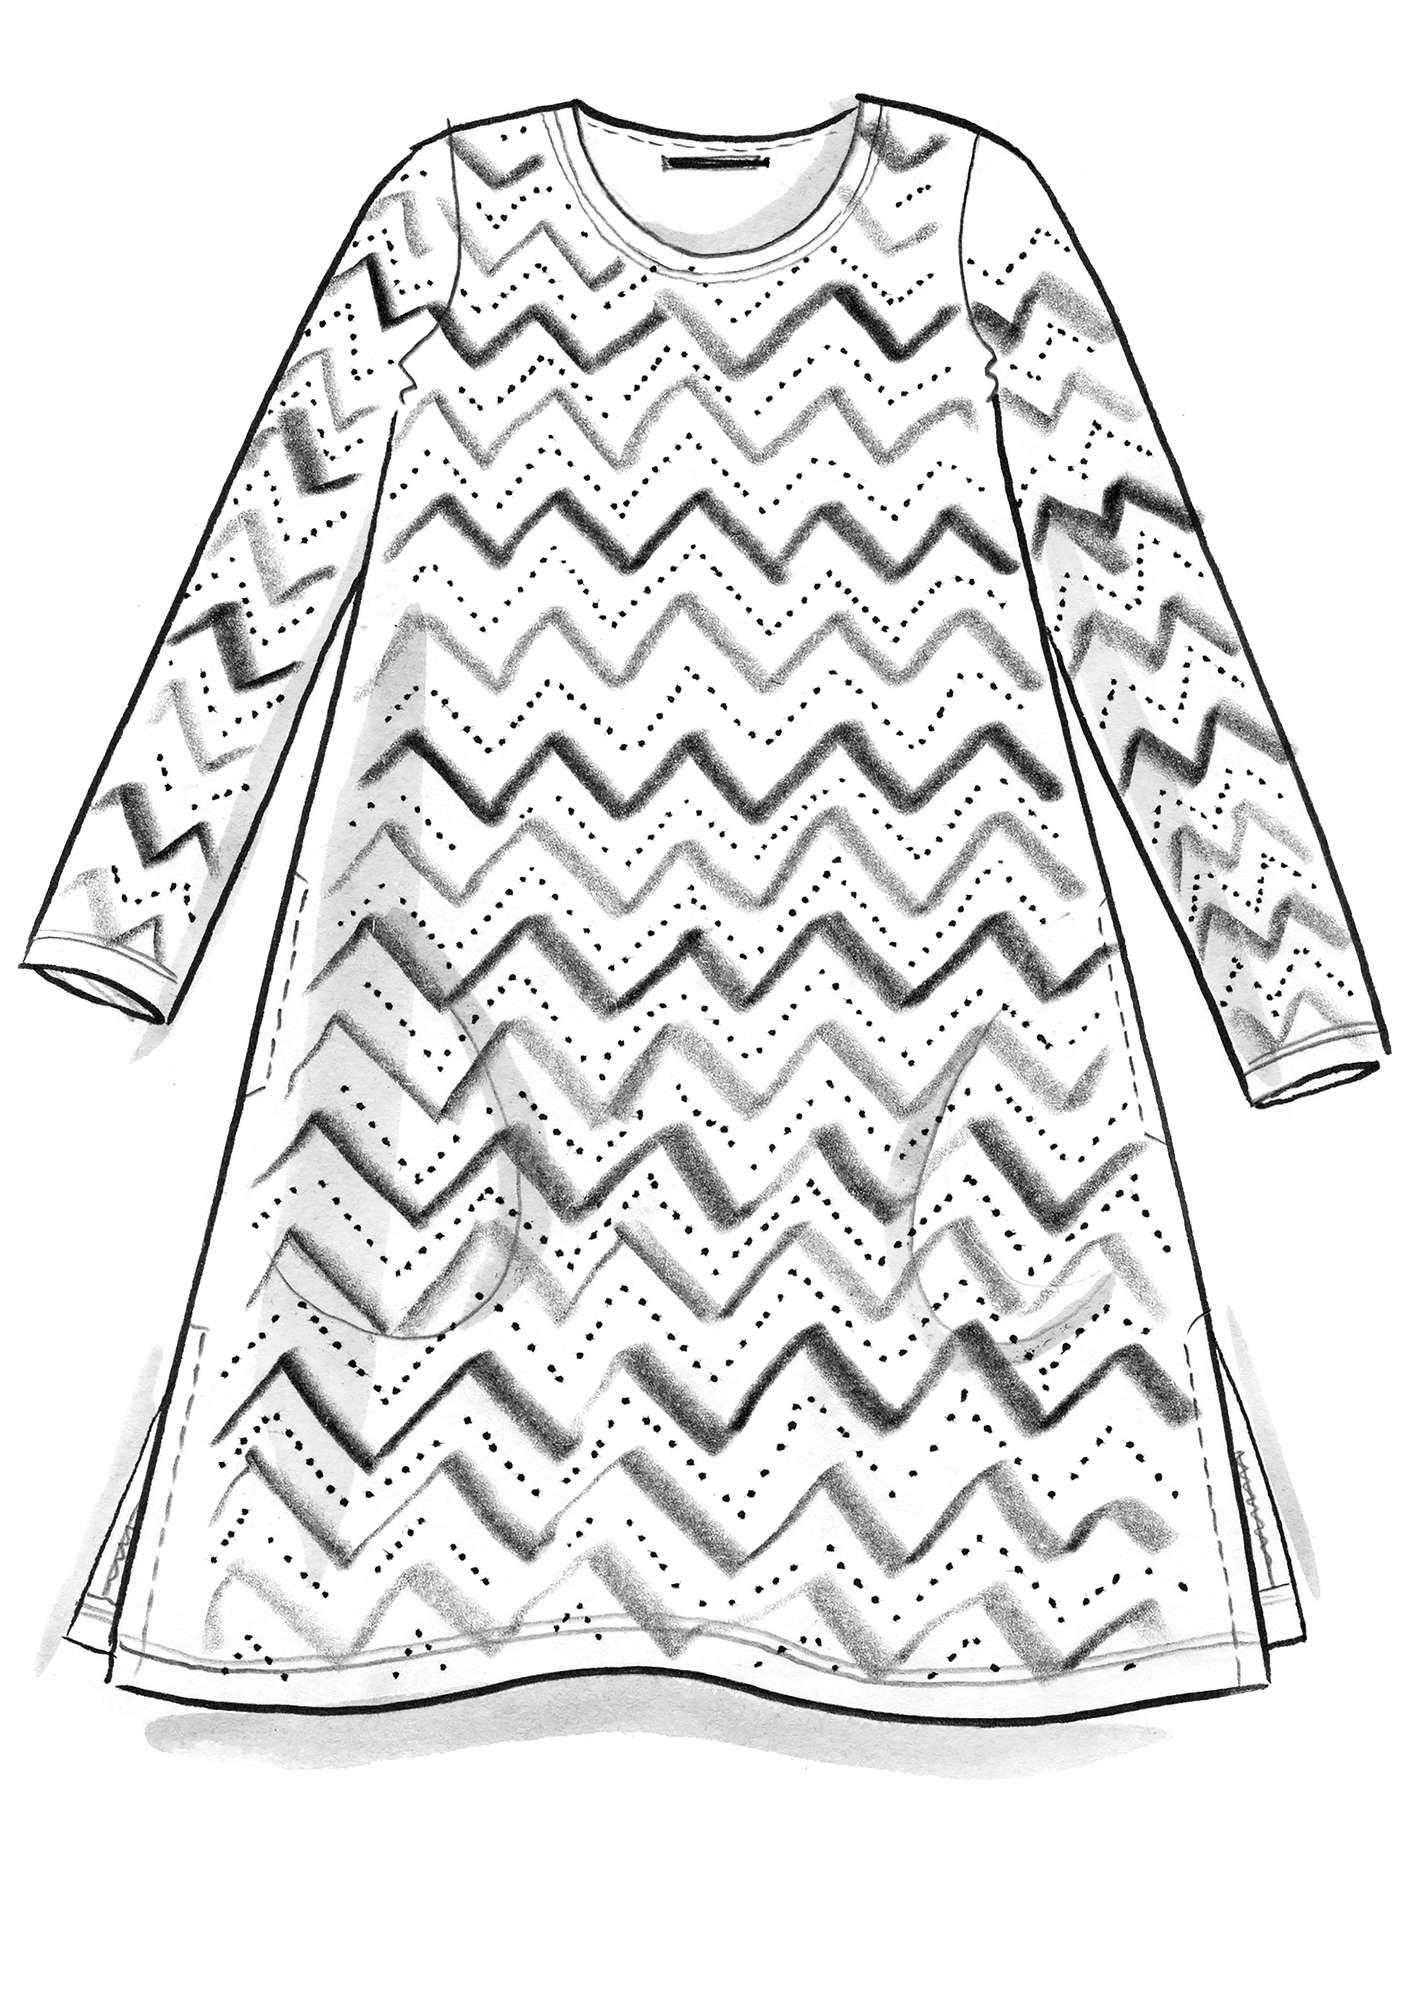 Trikottunika „Zigzag“ aus Öko-Baumwolle/Modal